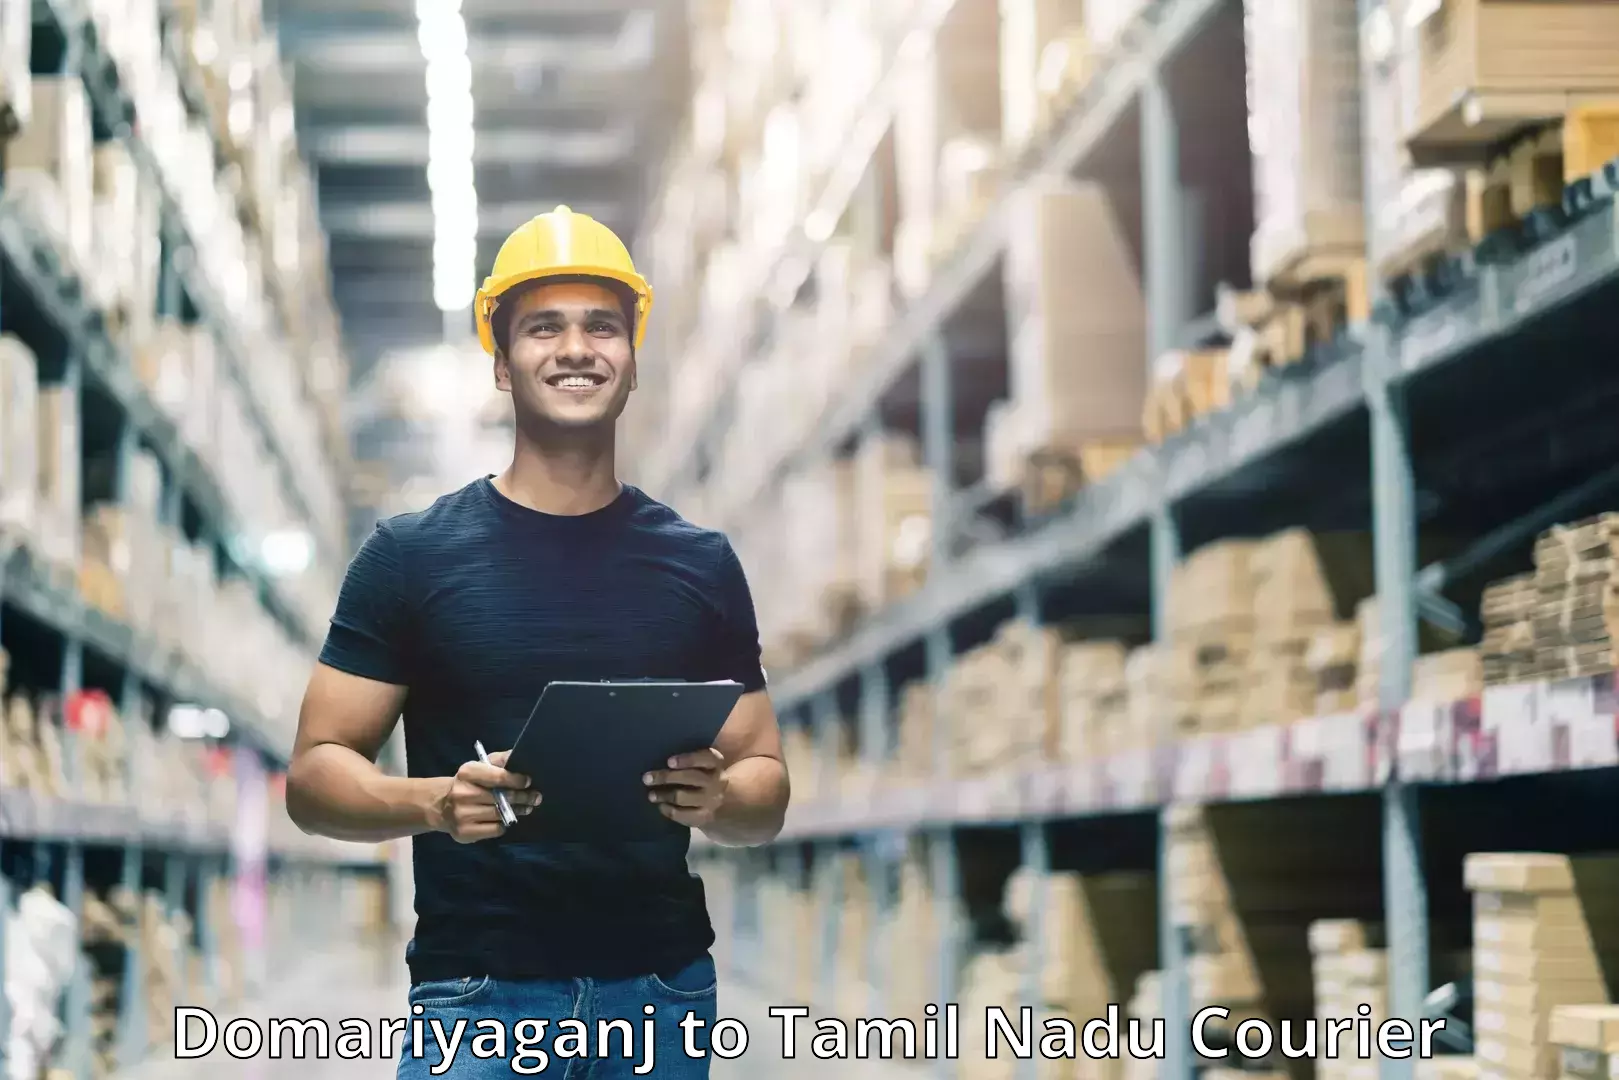 Global logistics network Domariyaganj to Tiruvannamalai